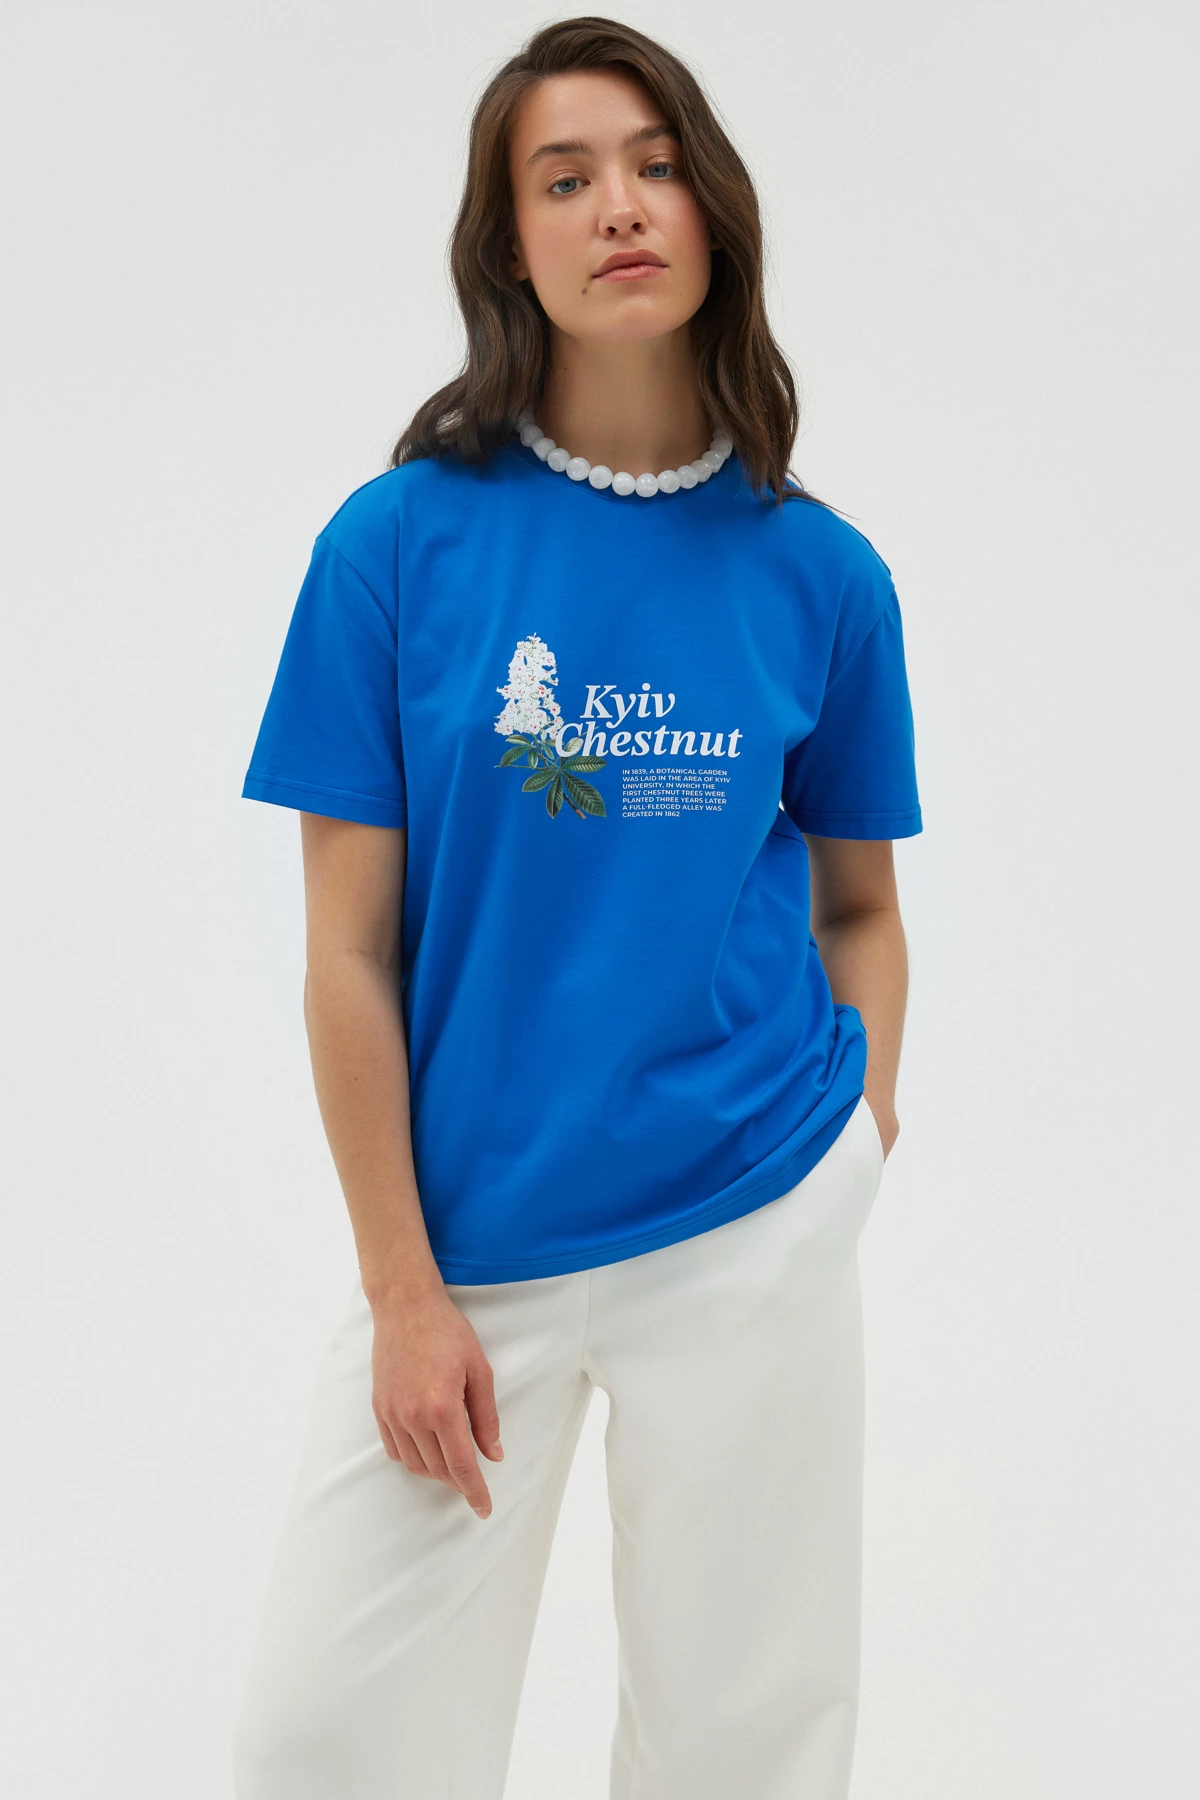 Blue T-shirt "Kyiv Chestnut" made of cotton, photo 2